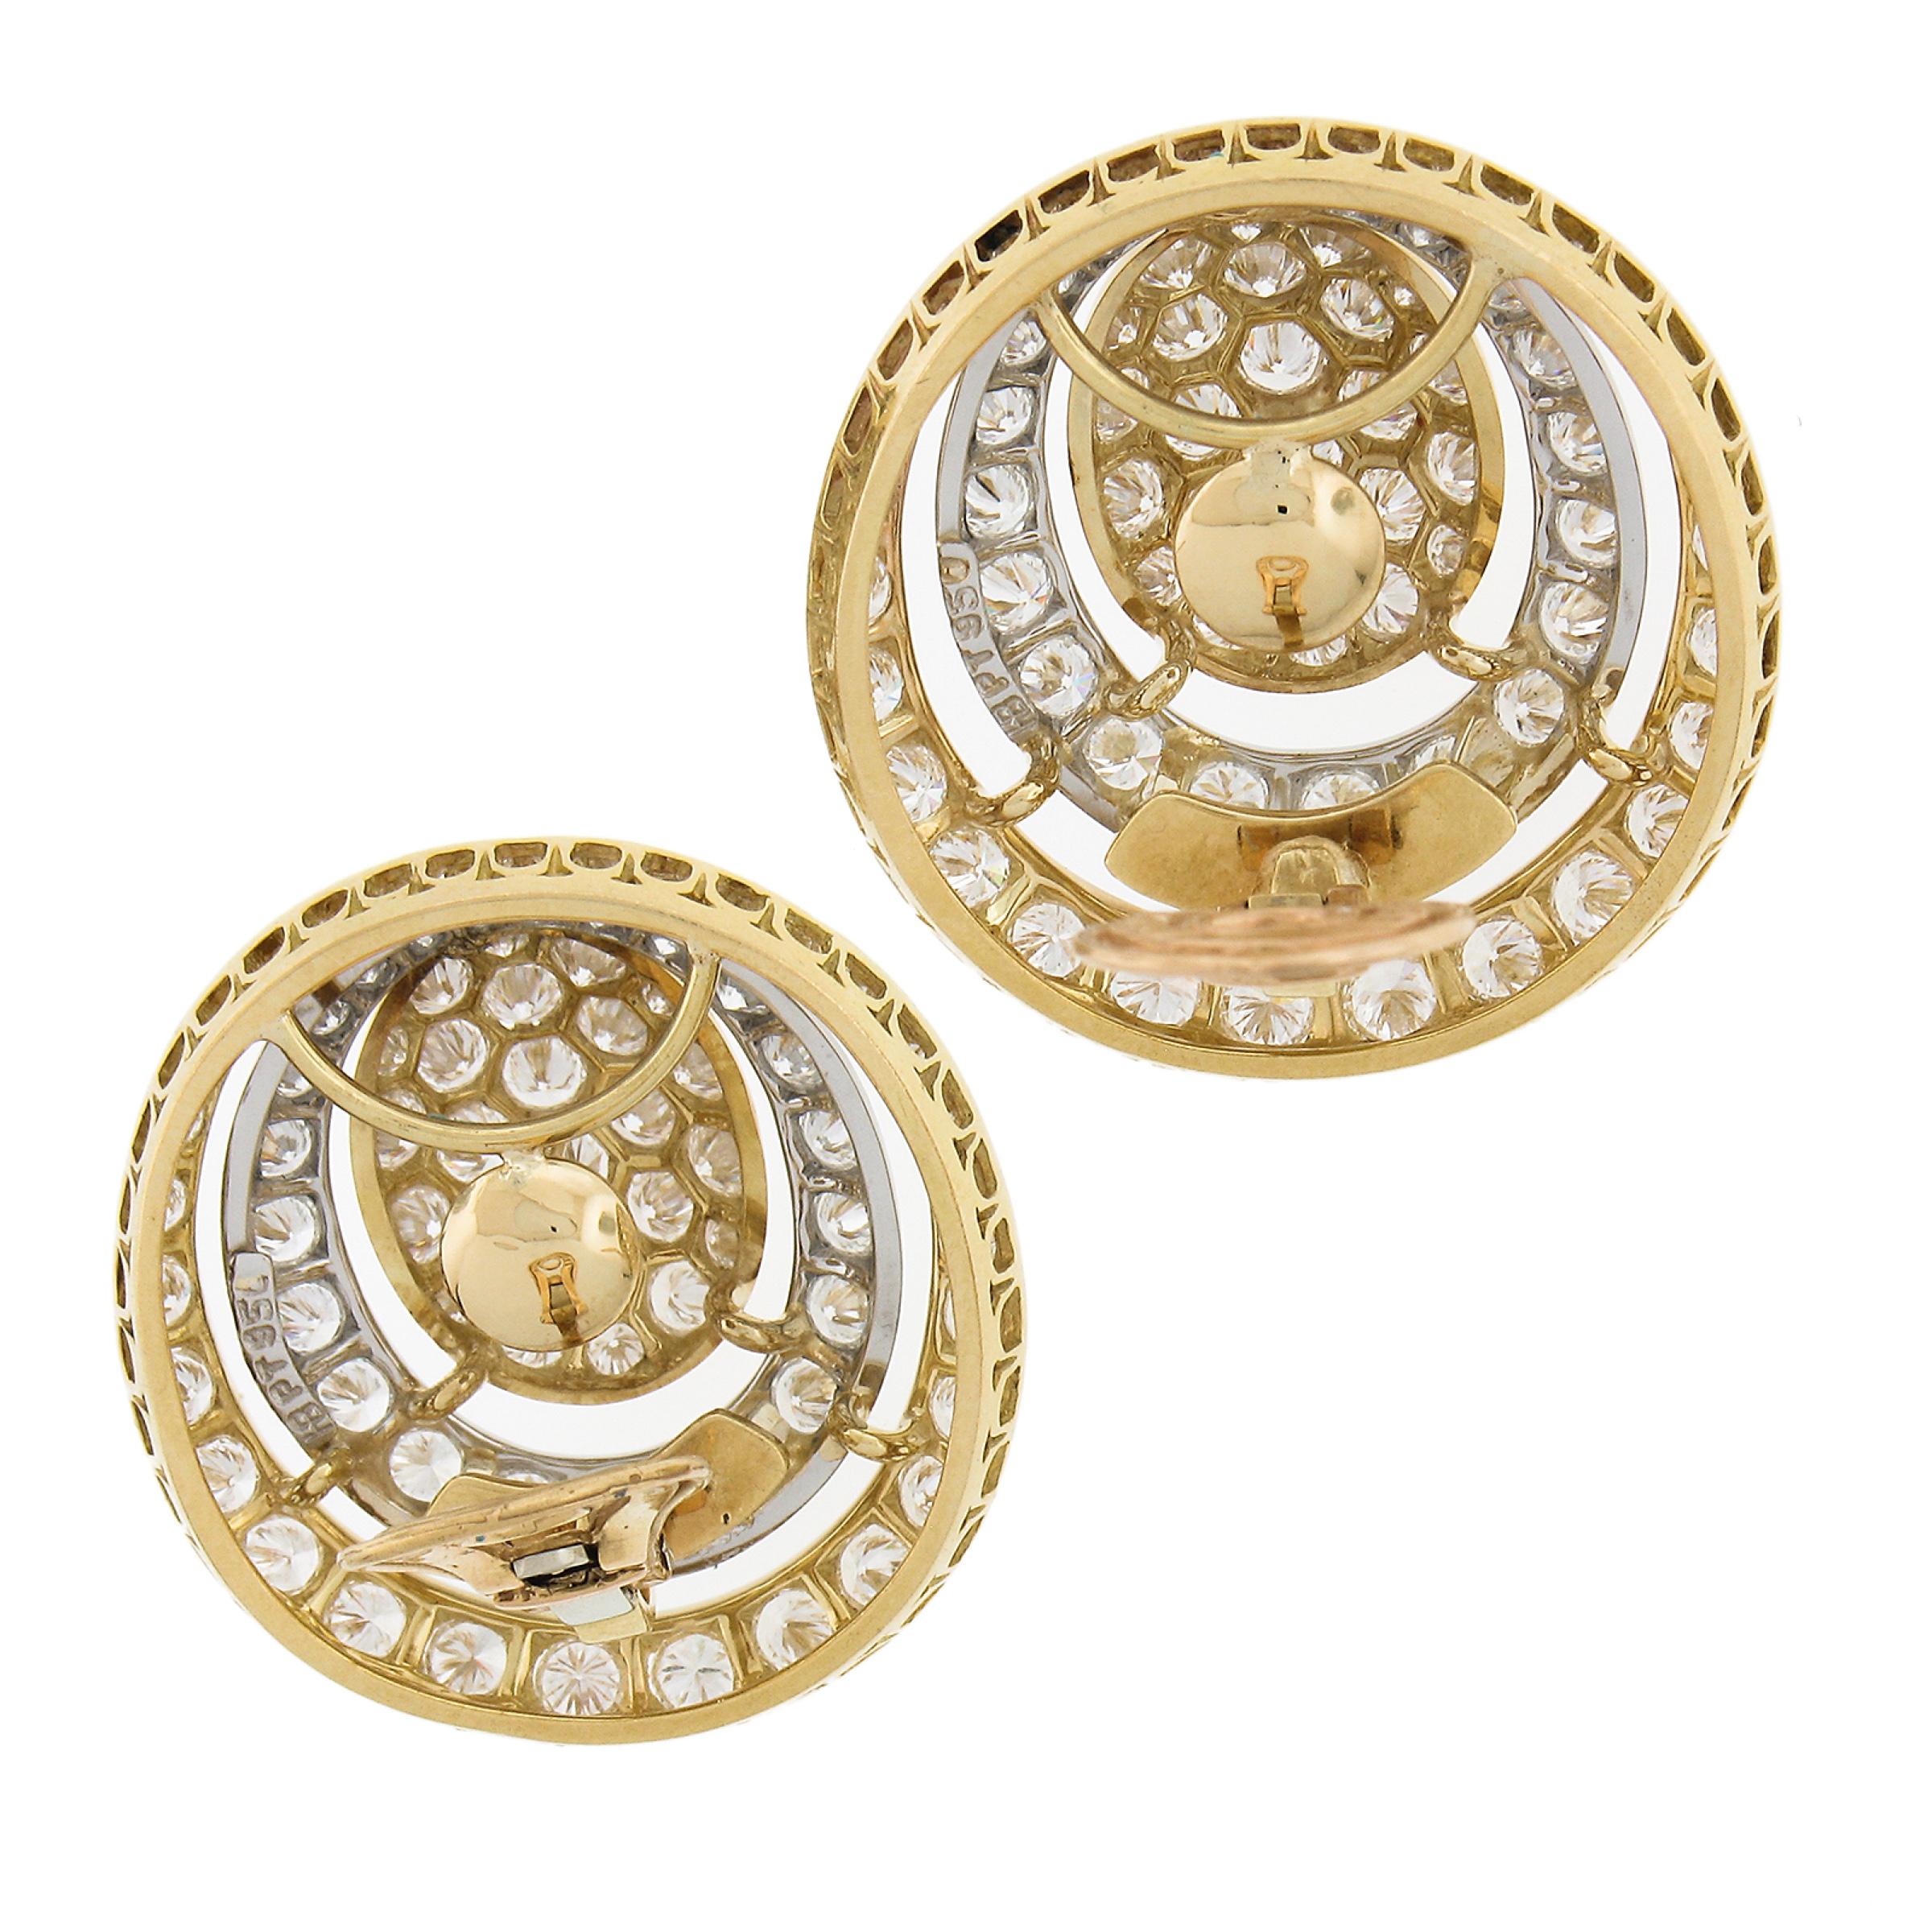 Hammerman Bros 18k Gold & Platinum 12.90ctw Diamond Large Open Circles Earrings 1